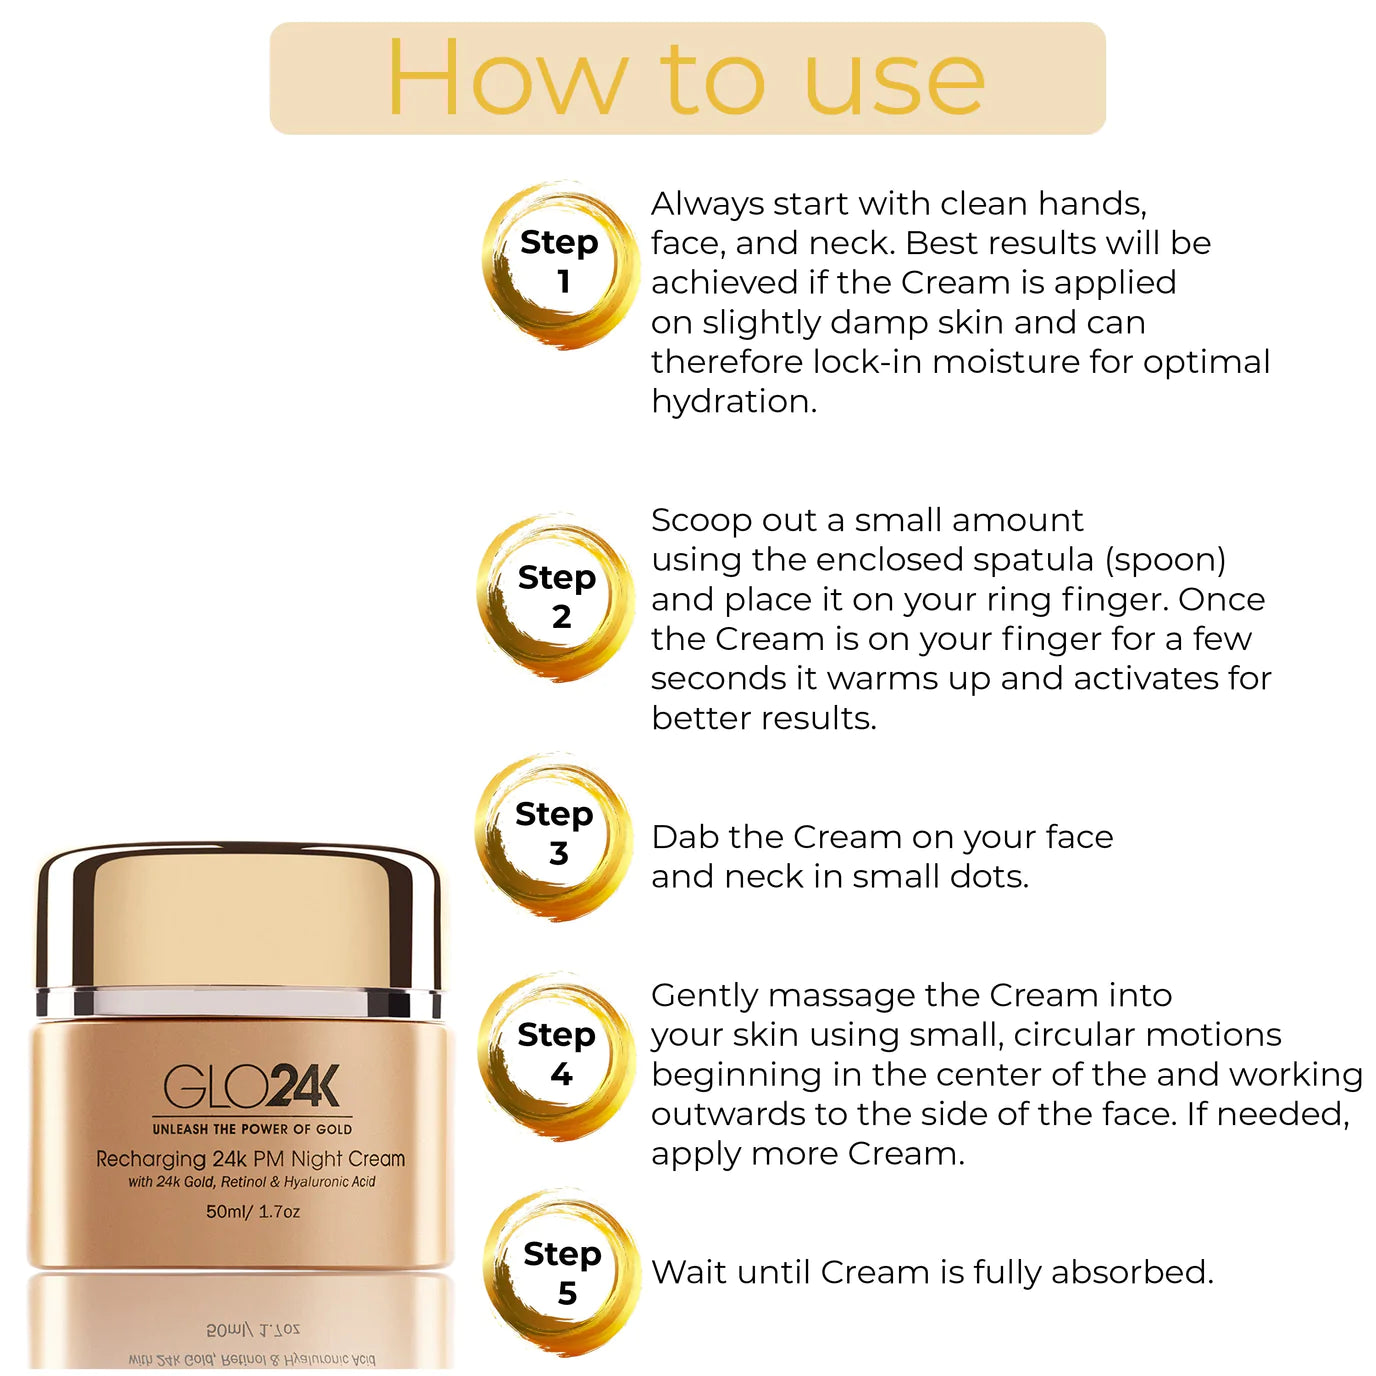 GLO24K Recharging 24k PM Night Cream, how to use